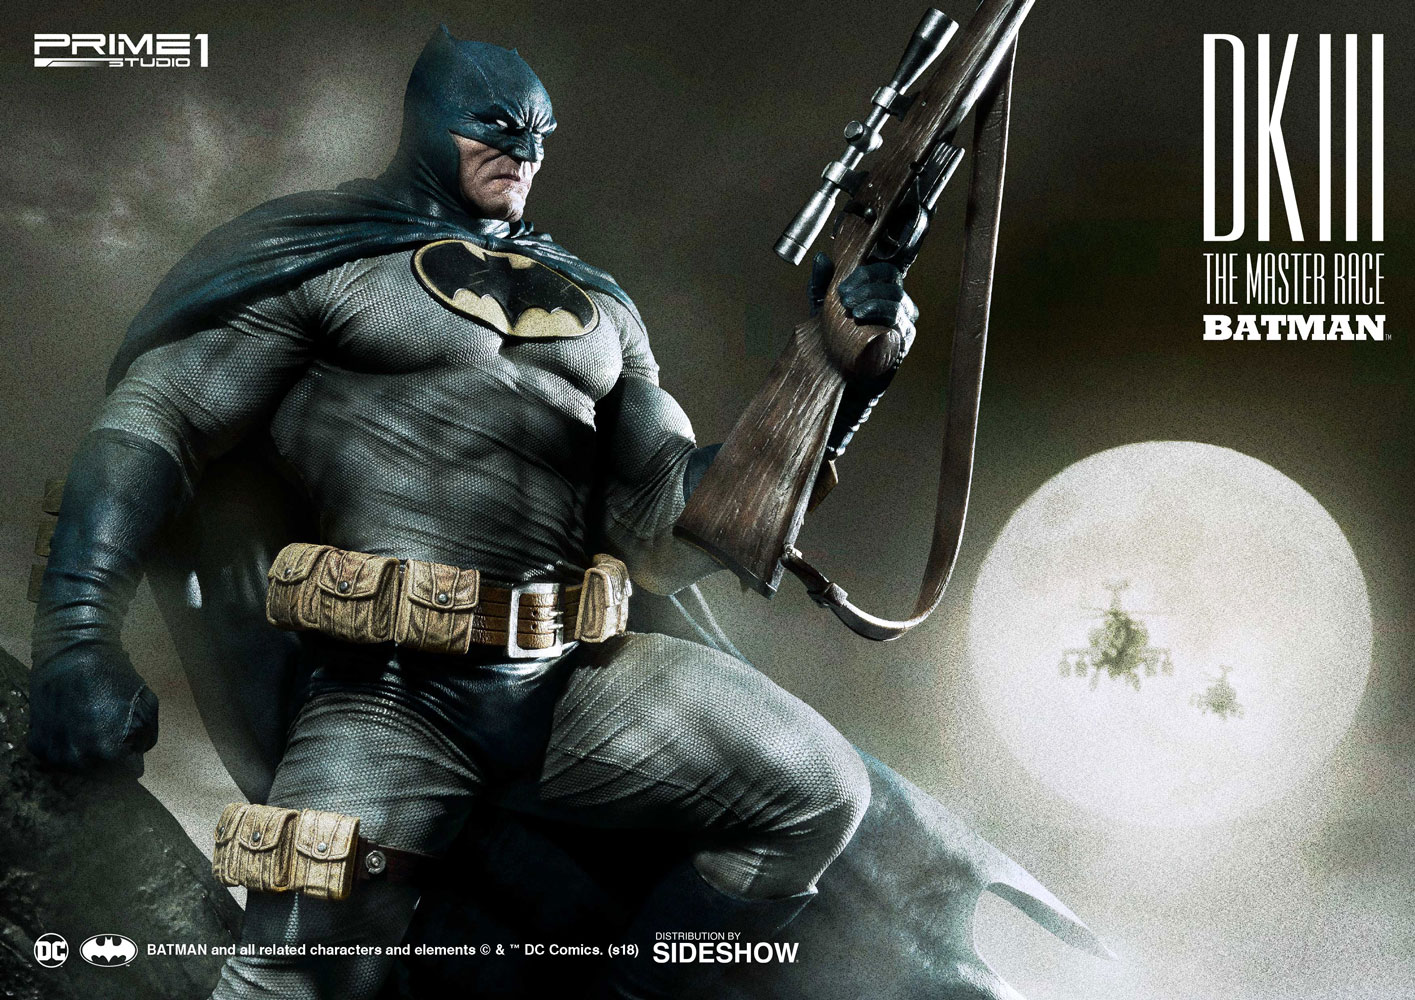 Batman Deluxe Version Statue - by Prime 1 Studio